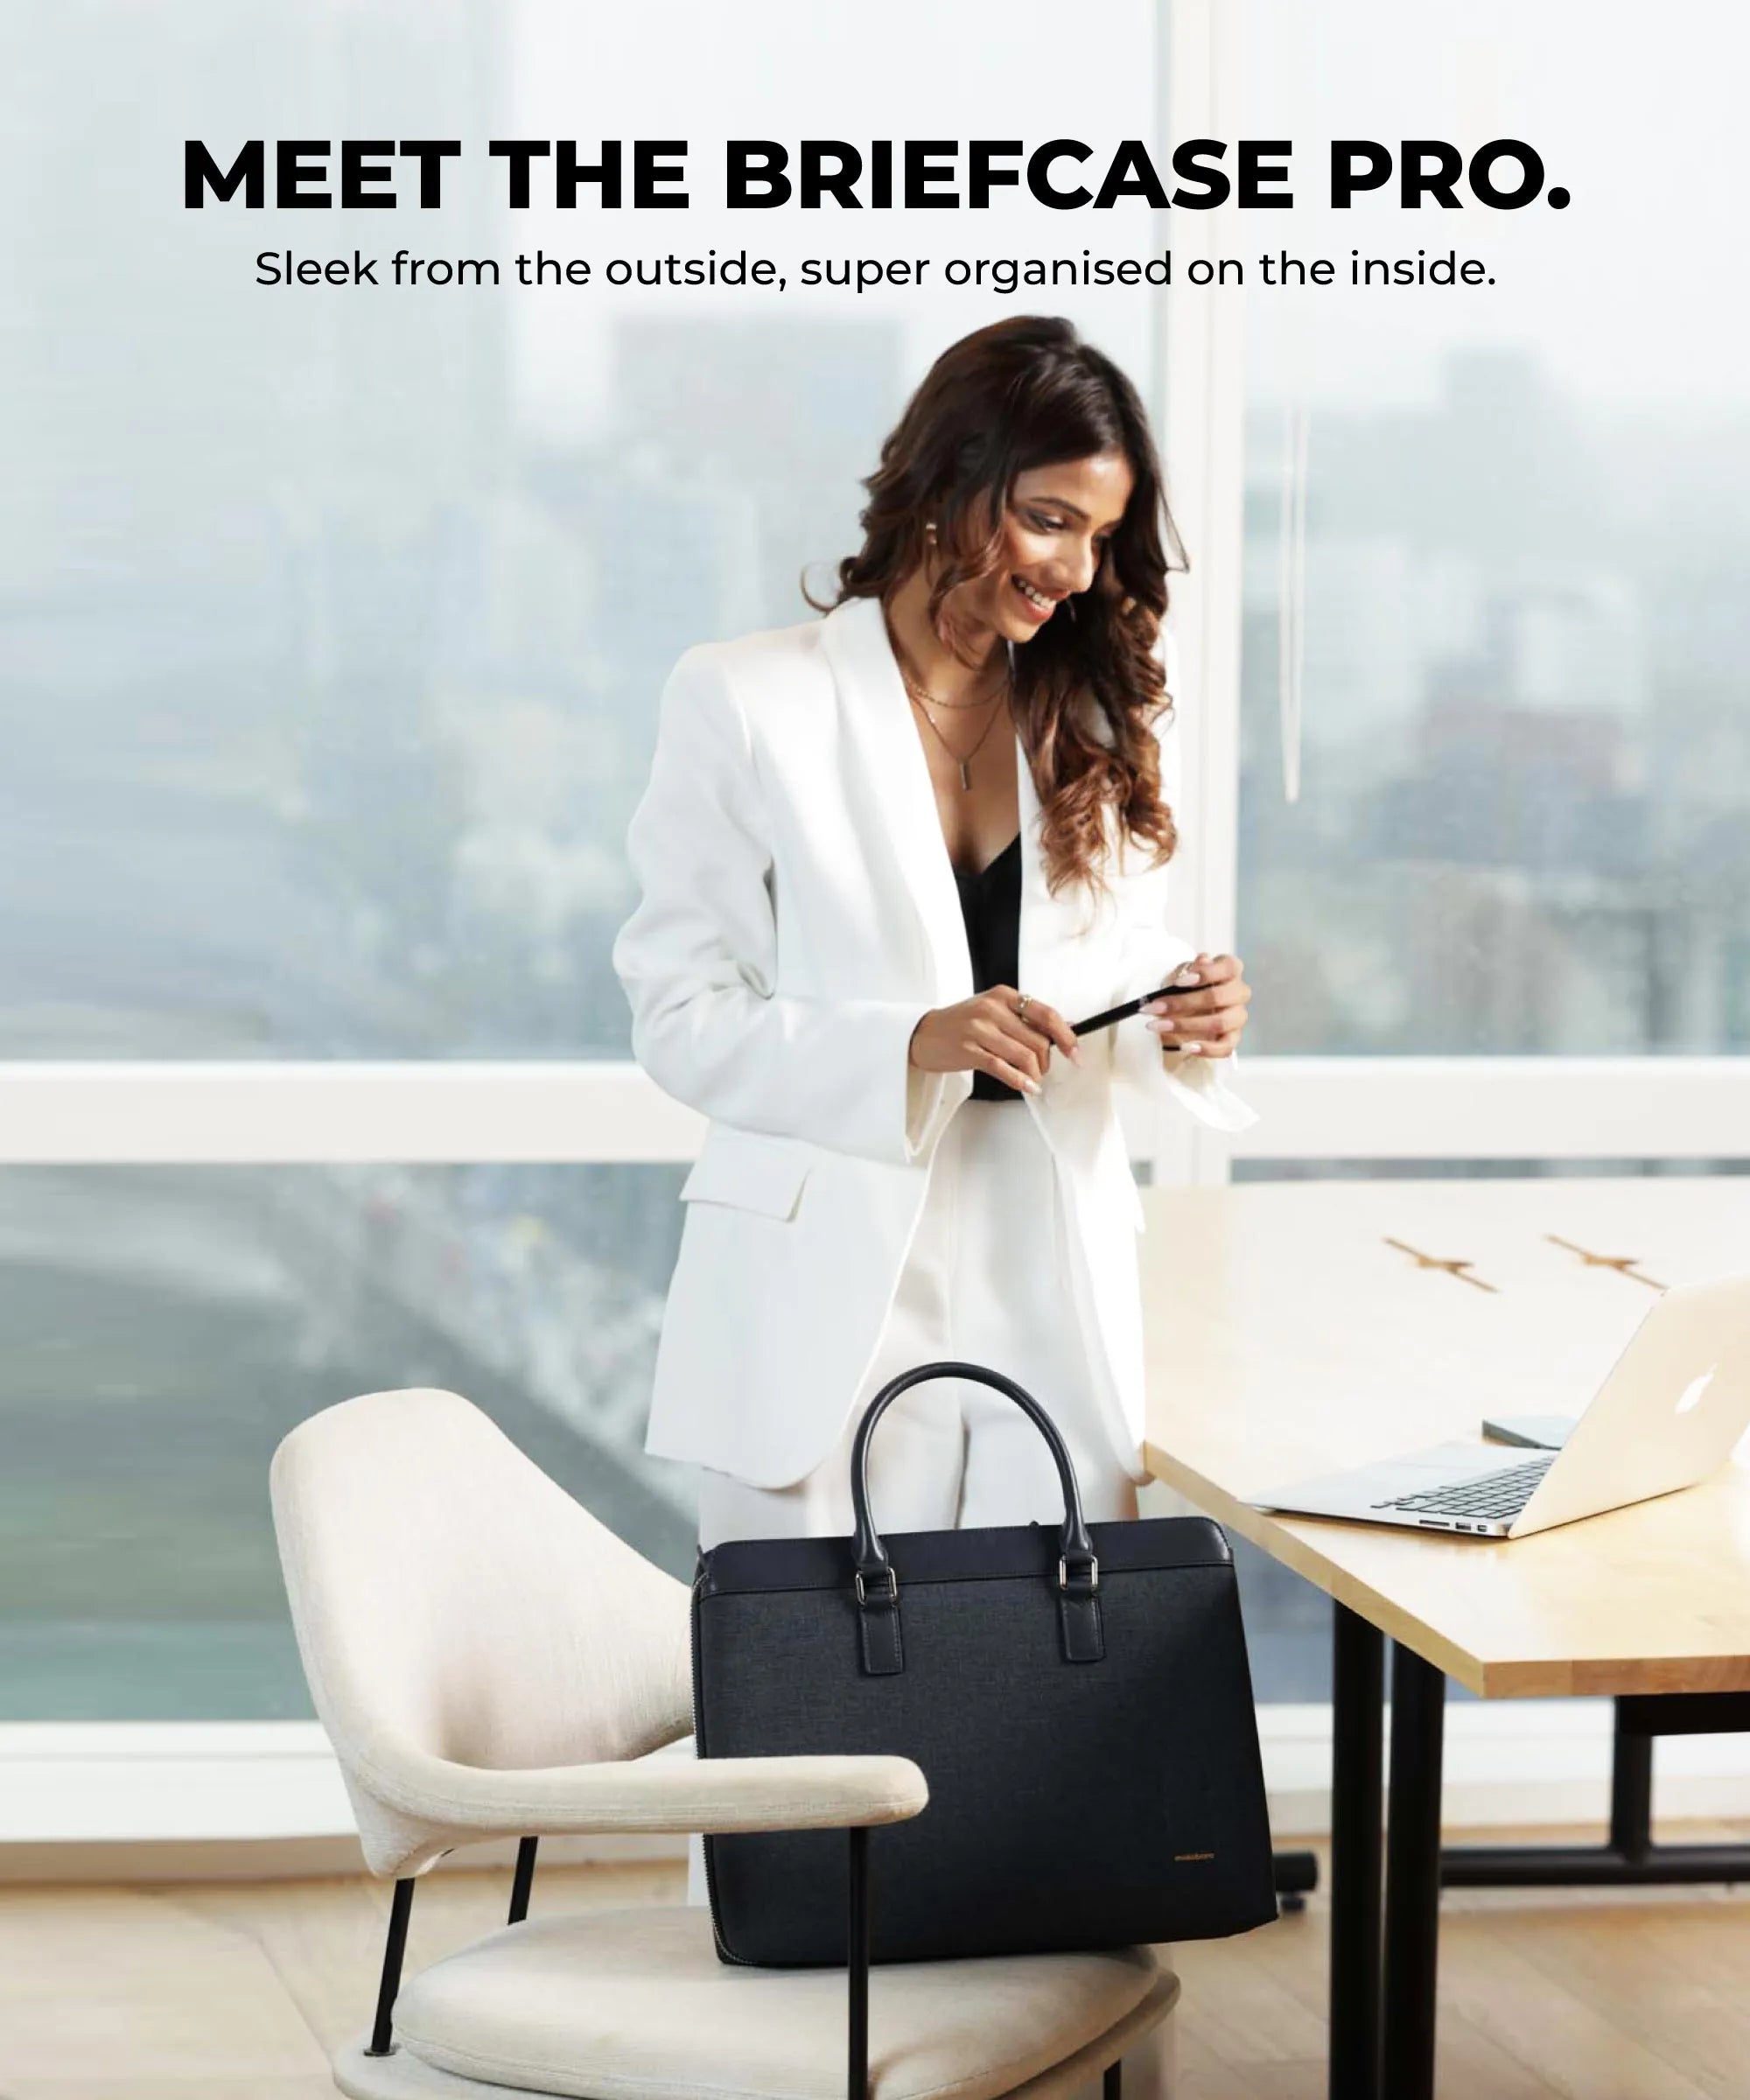 The Briefcase Pro